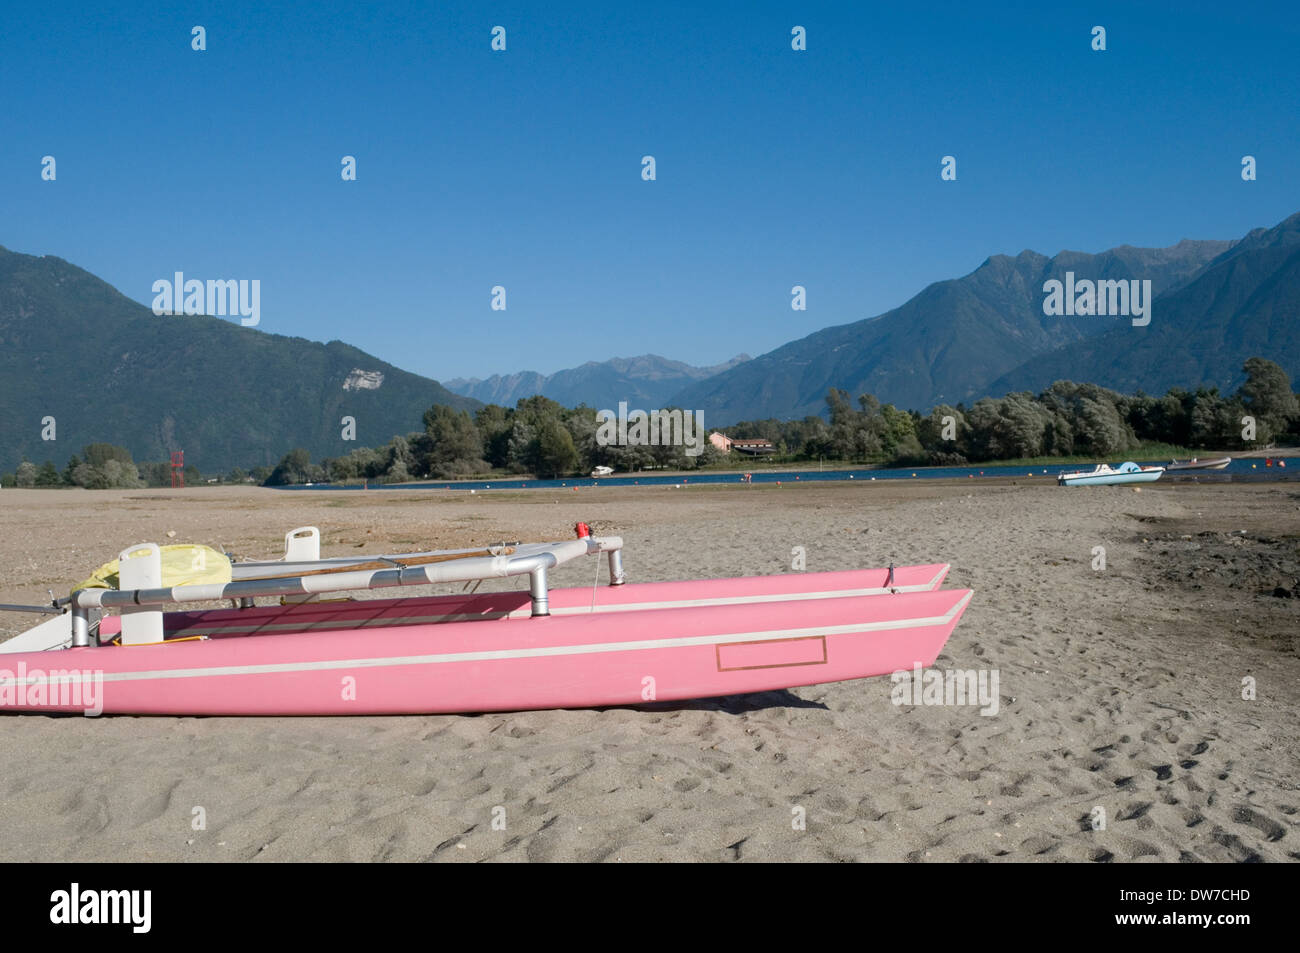 Pink catamaran on the beach, Sorico, Lake Como, Italy Stock Photo